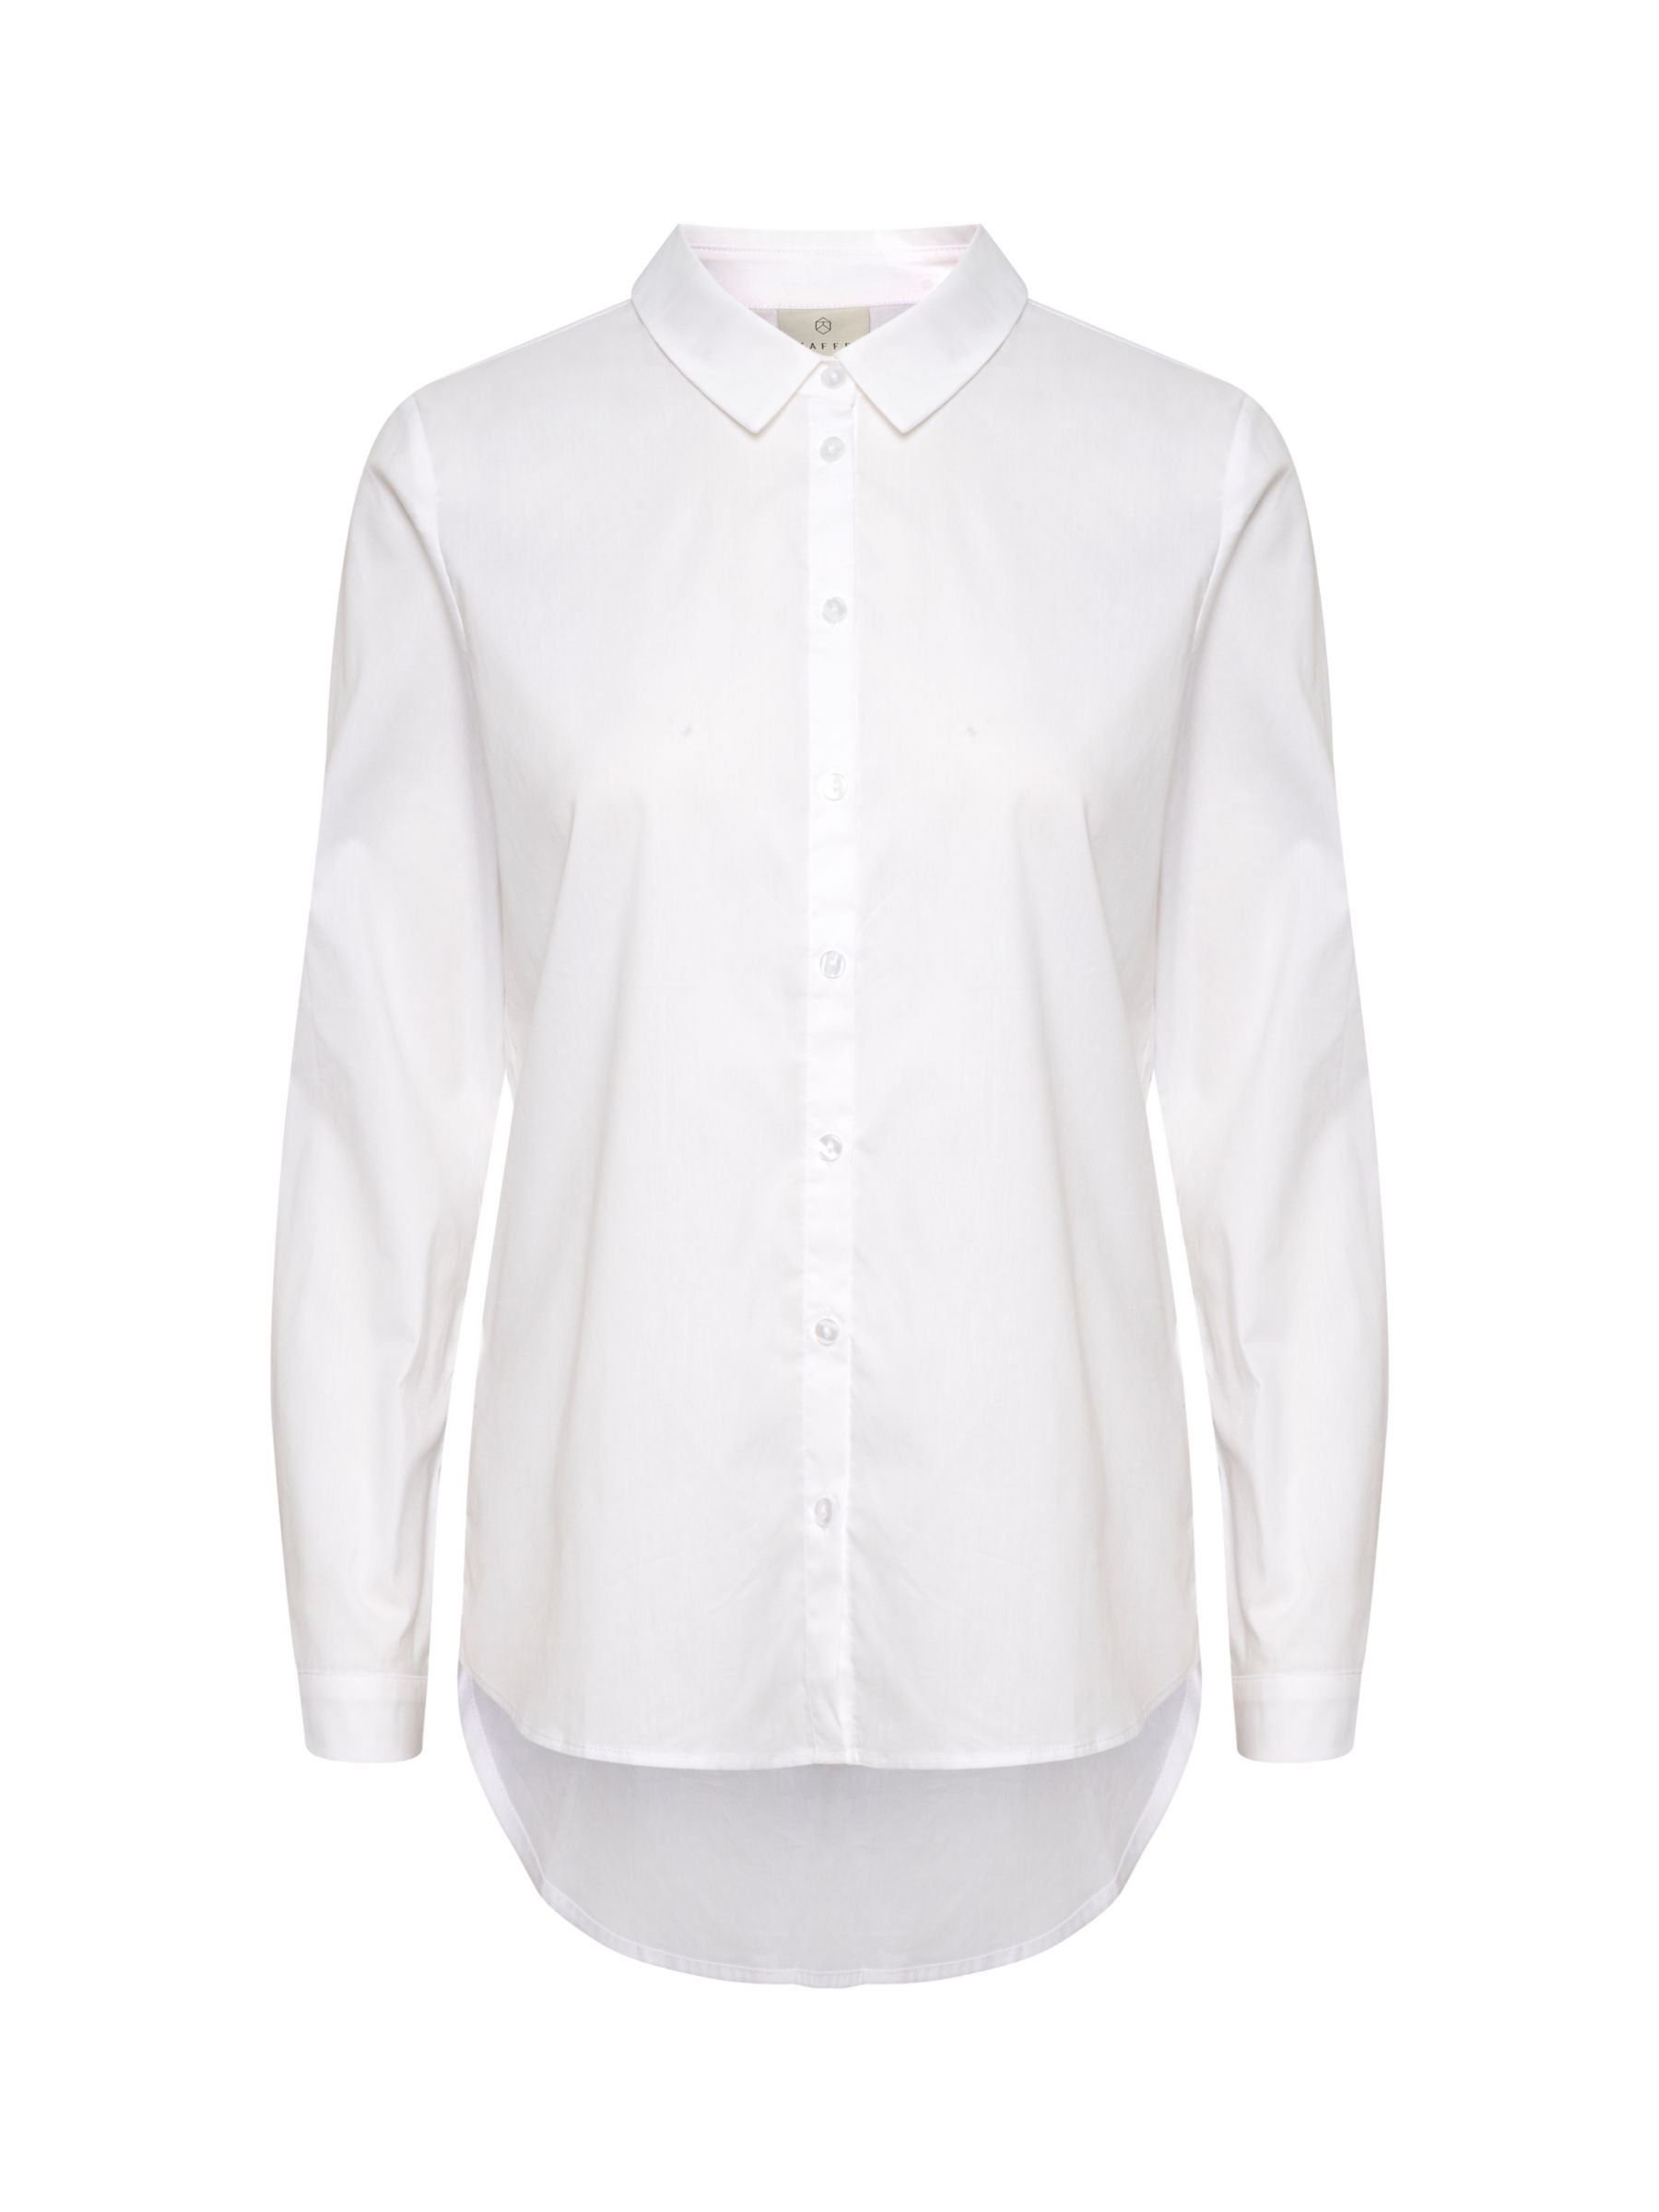 KAFFE Scarlet Long Sleeve Shirt, White at John Lewis & Partners